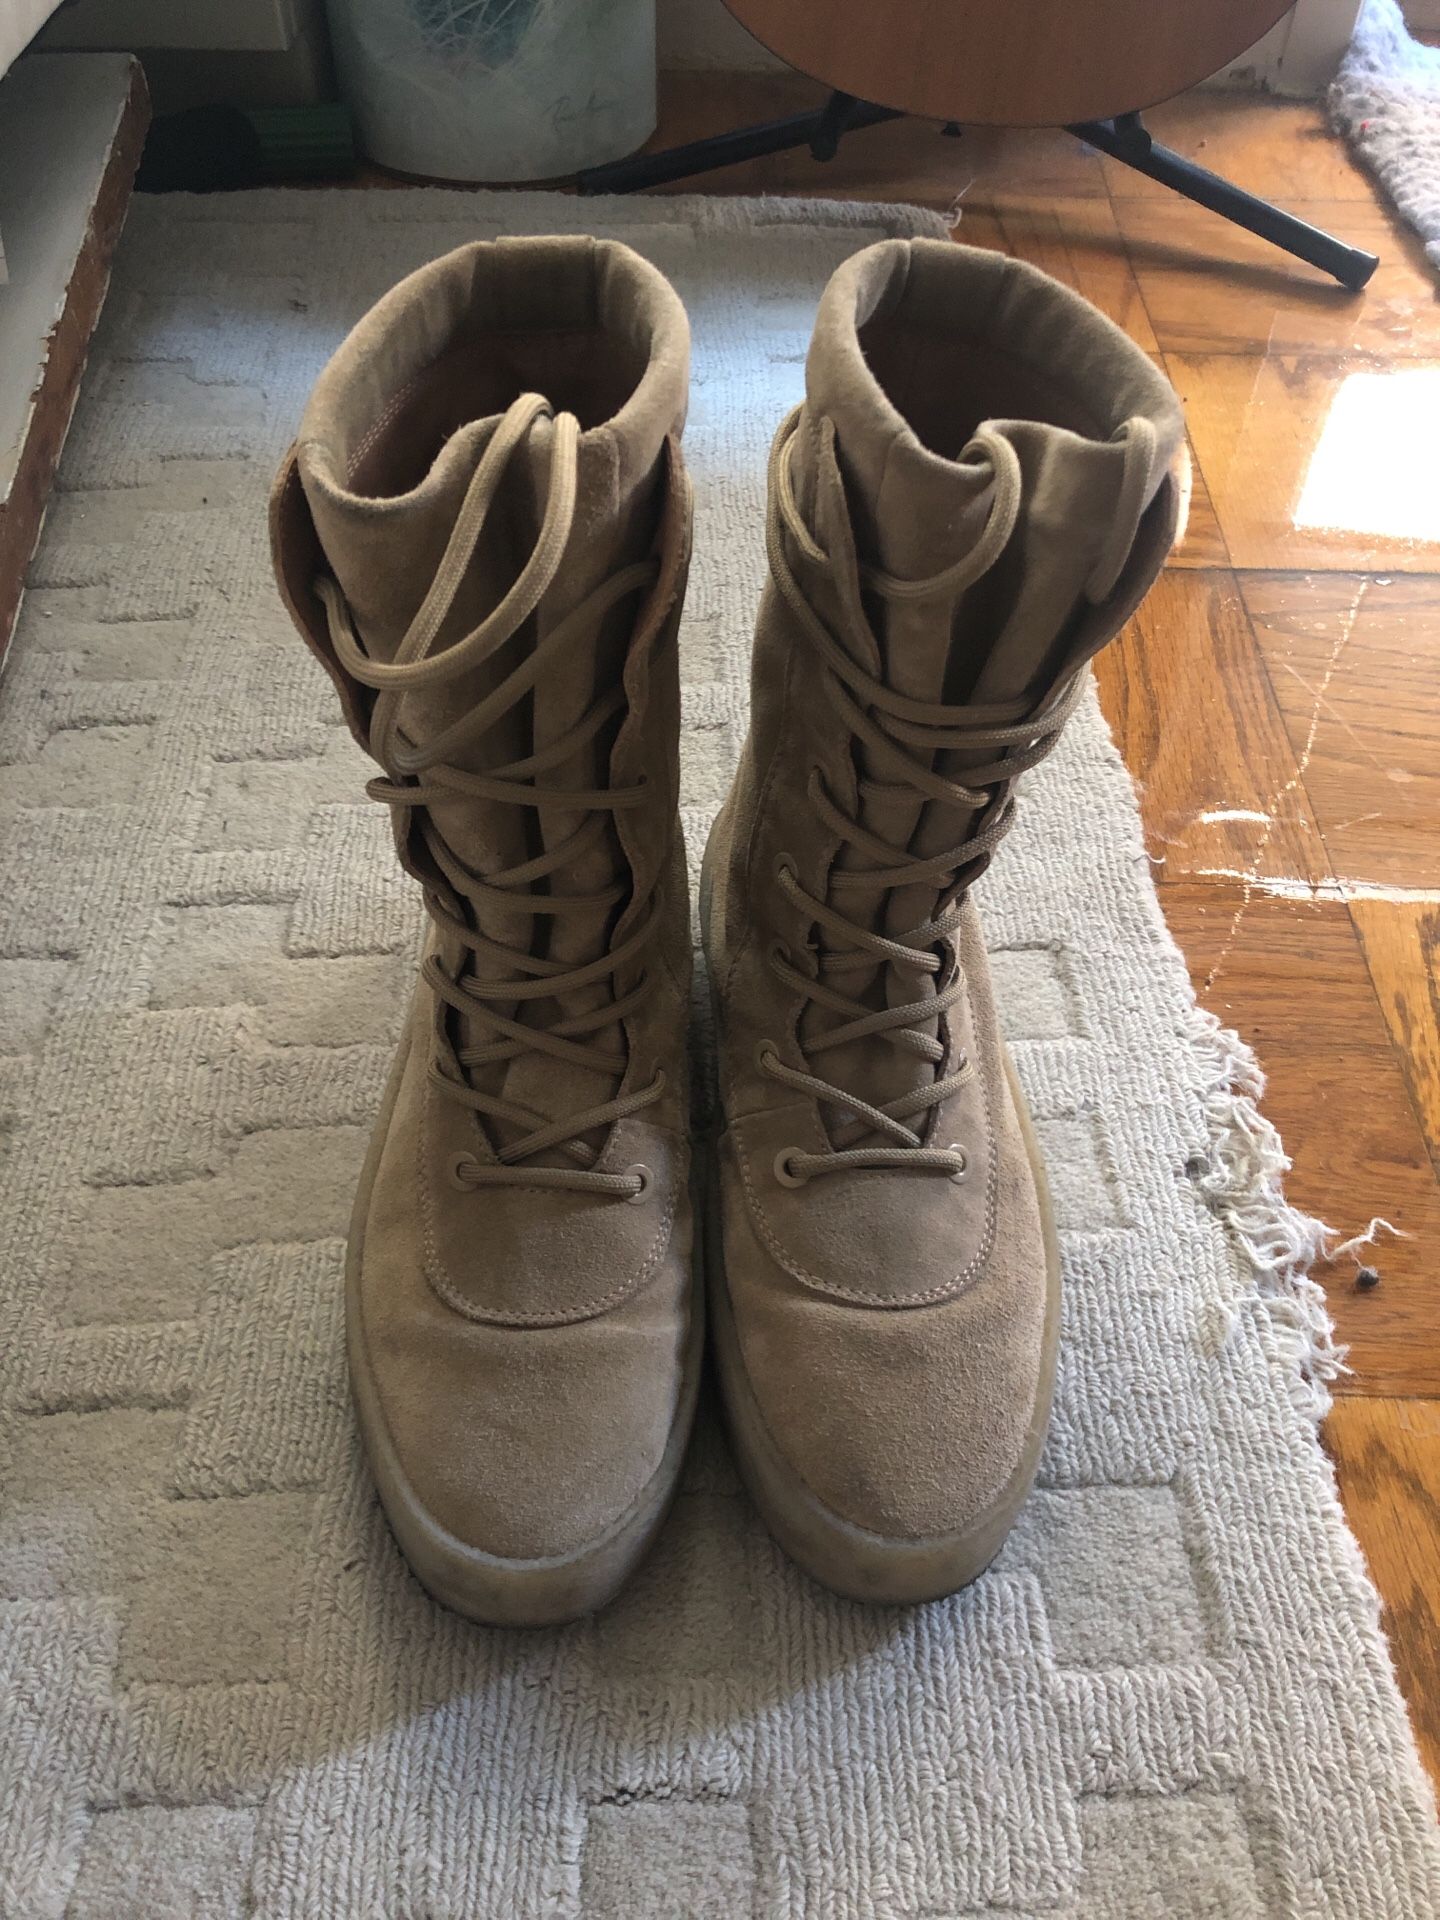 yeezy season 2 military boot size 11